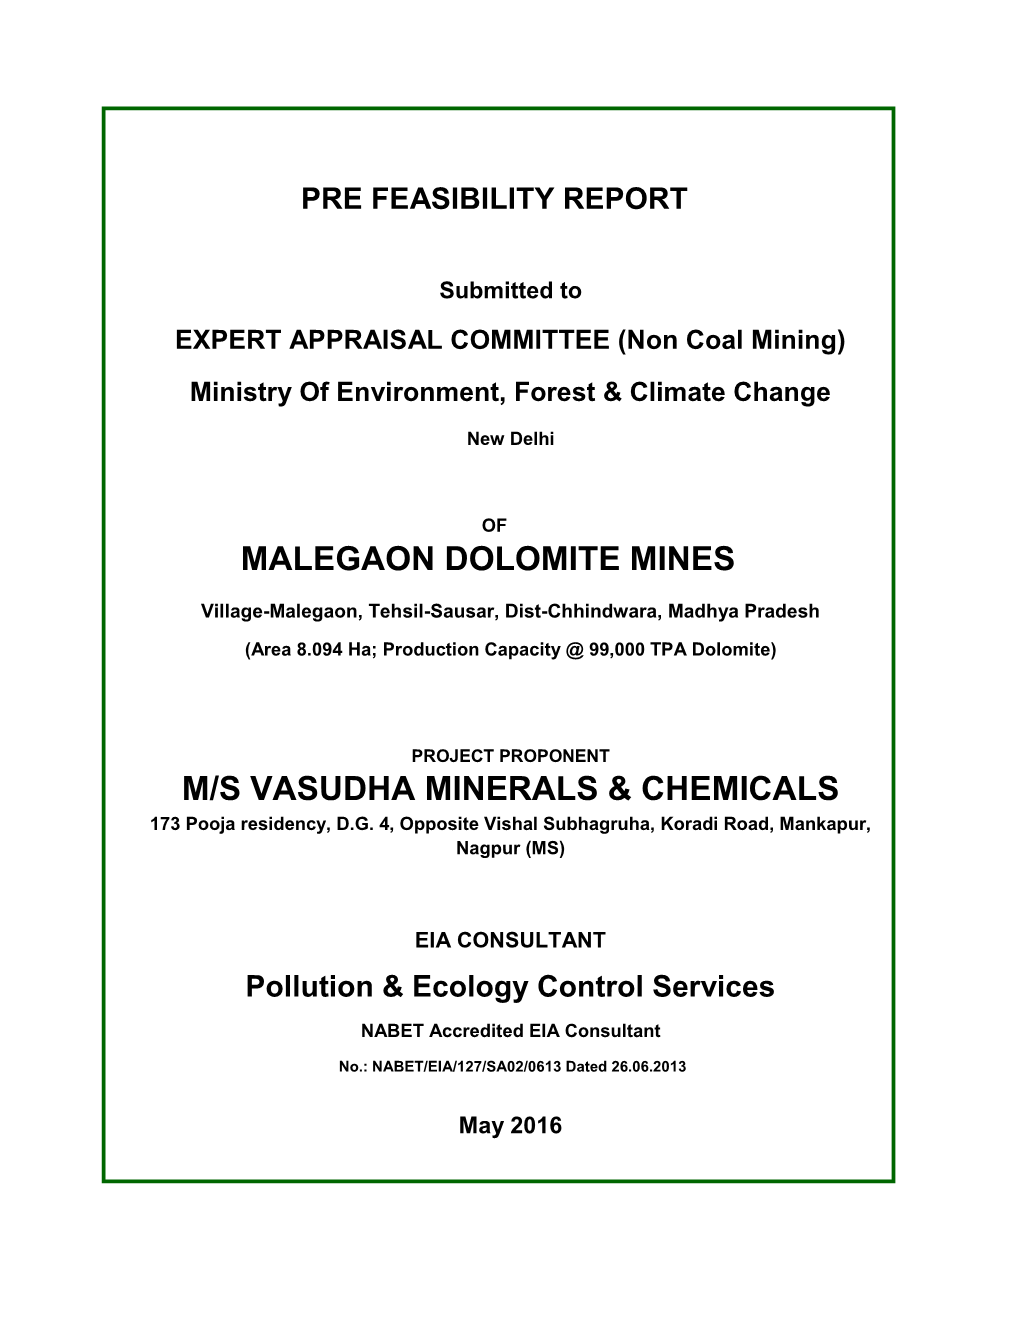 Malegaon Dolomite Mines M/S Vasudha Minerals